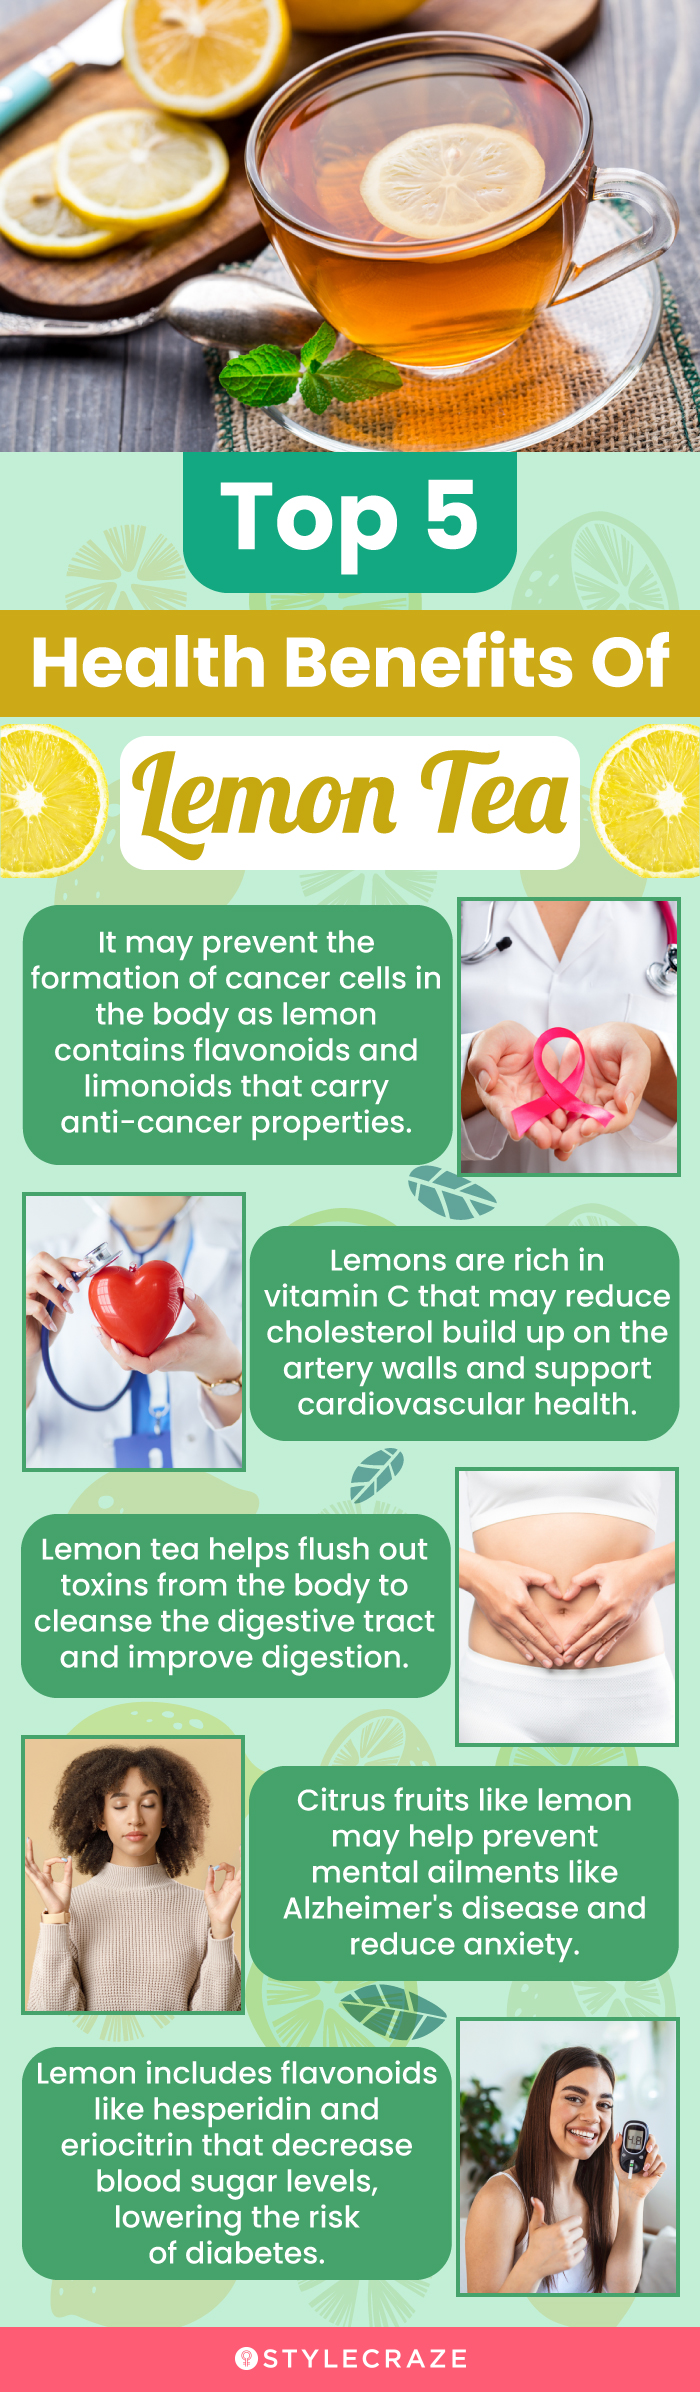 top 5 health benefits of lemon tea (infographic)